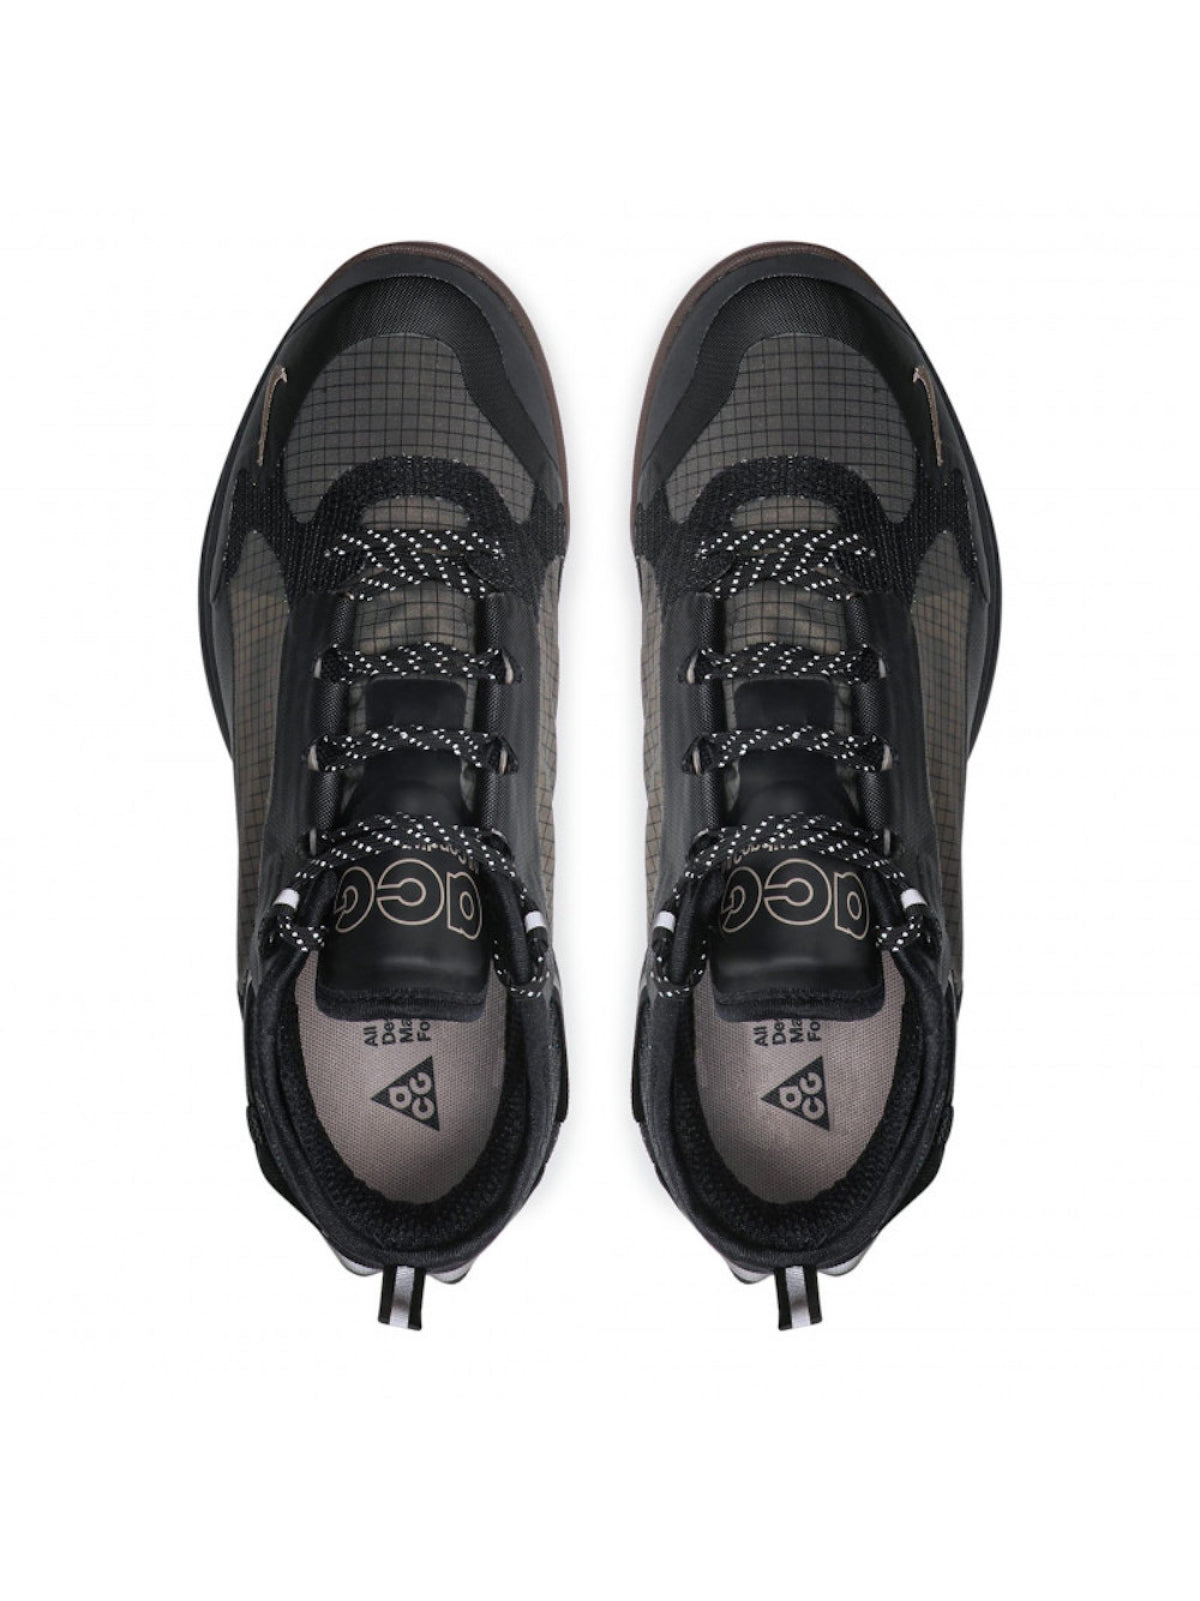 Nike-OUTLET-SALE-ACG Air Nasu 2 Sneakers-ARCHIVIST